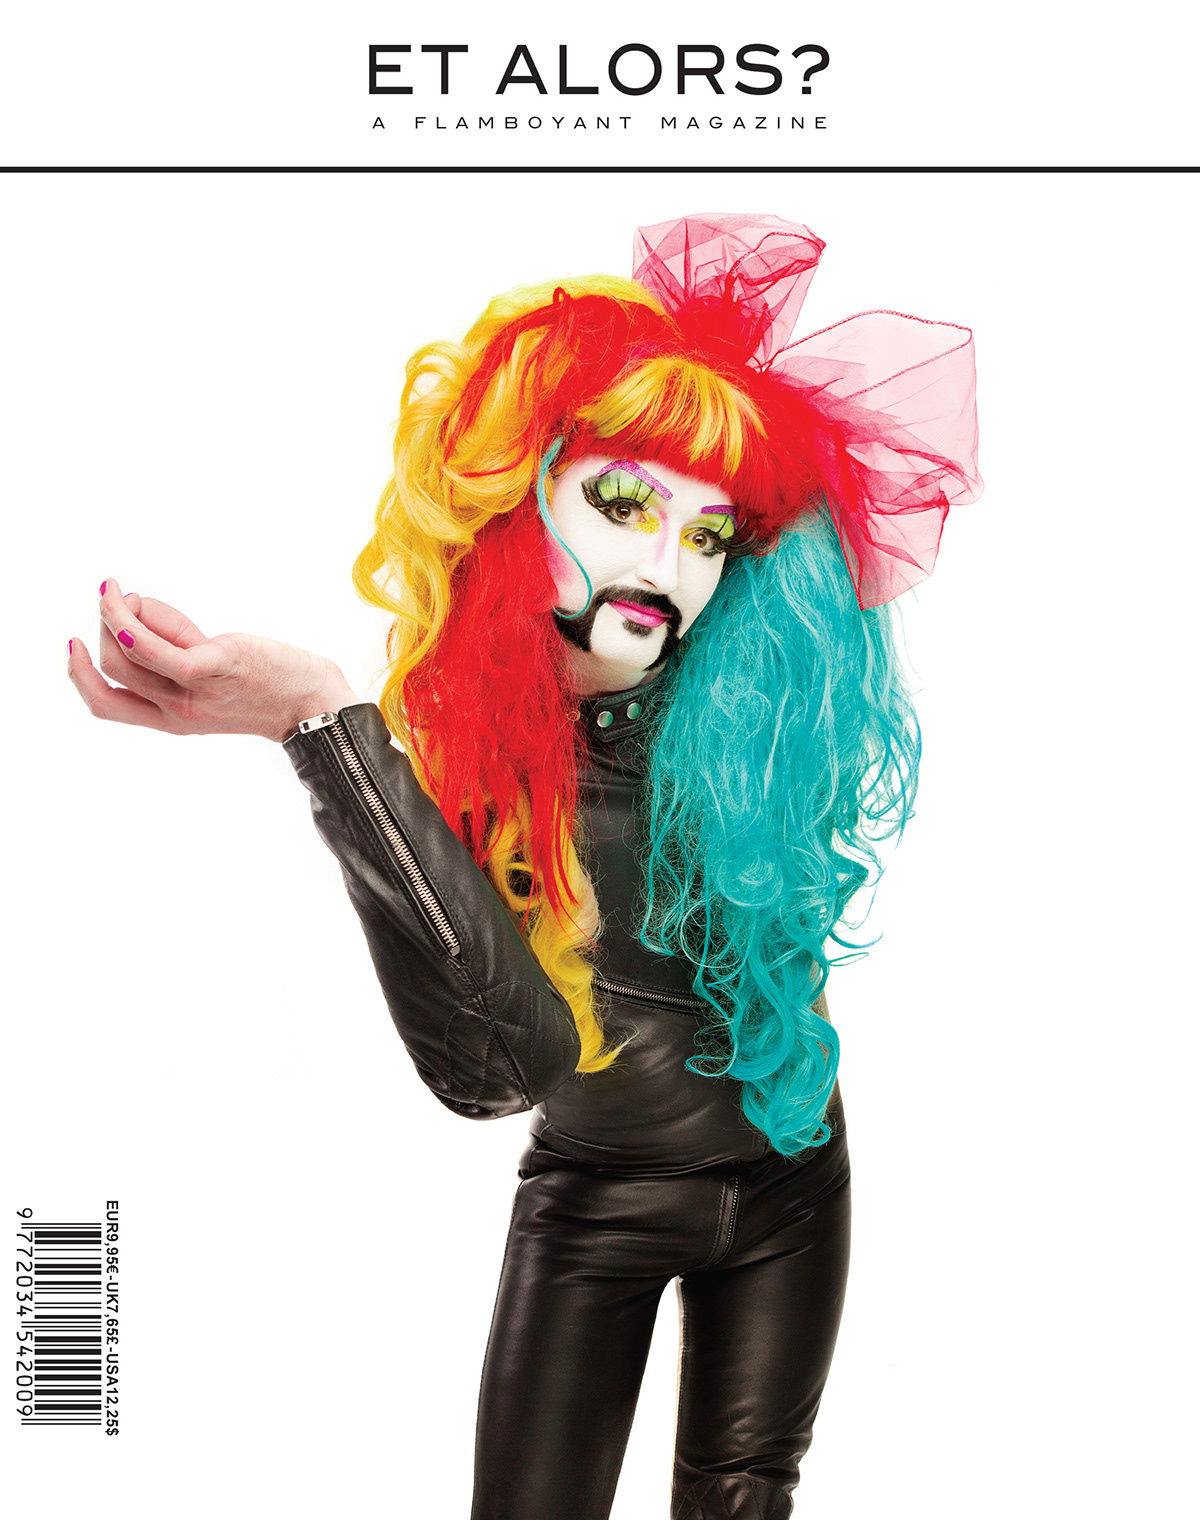 Et Alors magazine cover Flashy gay transgender art Creativity fabulous